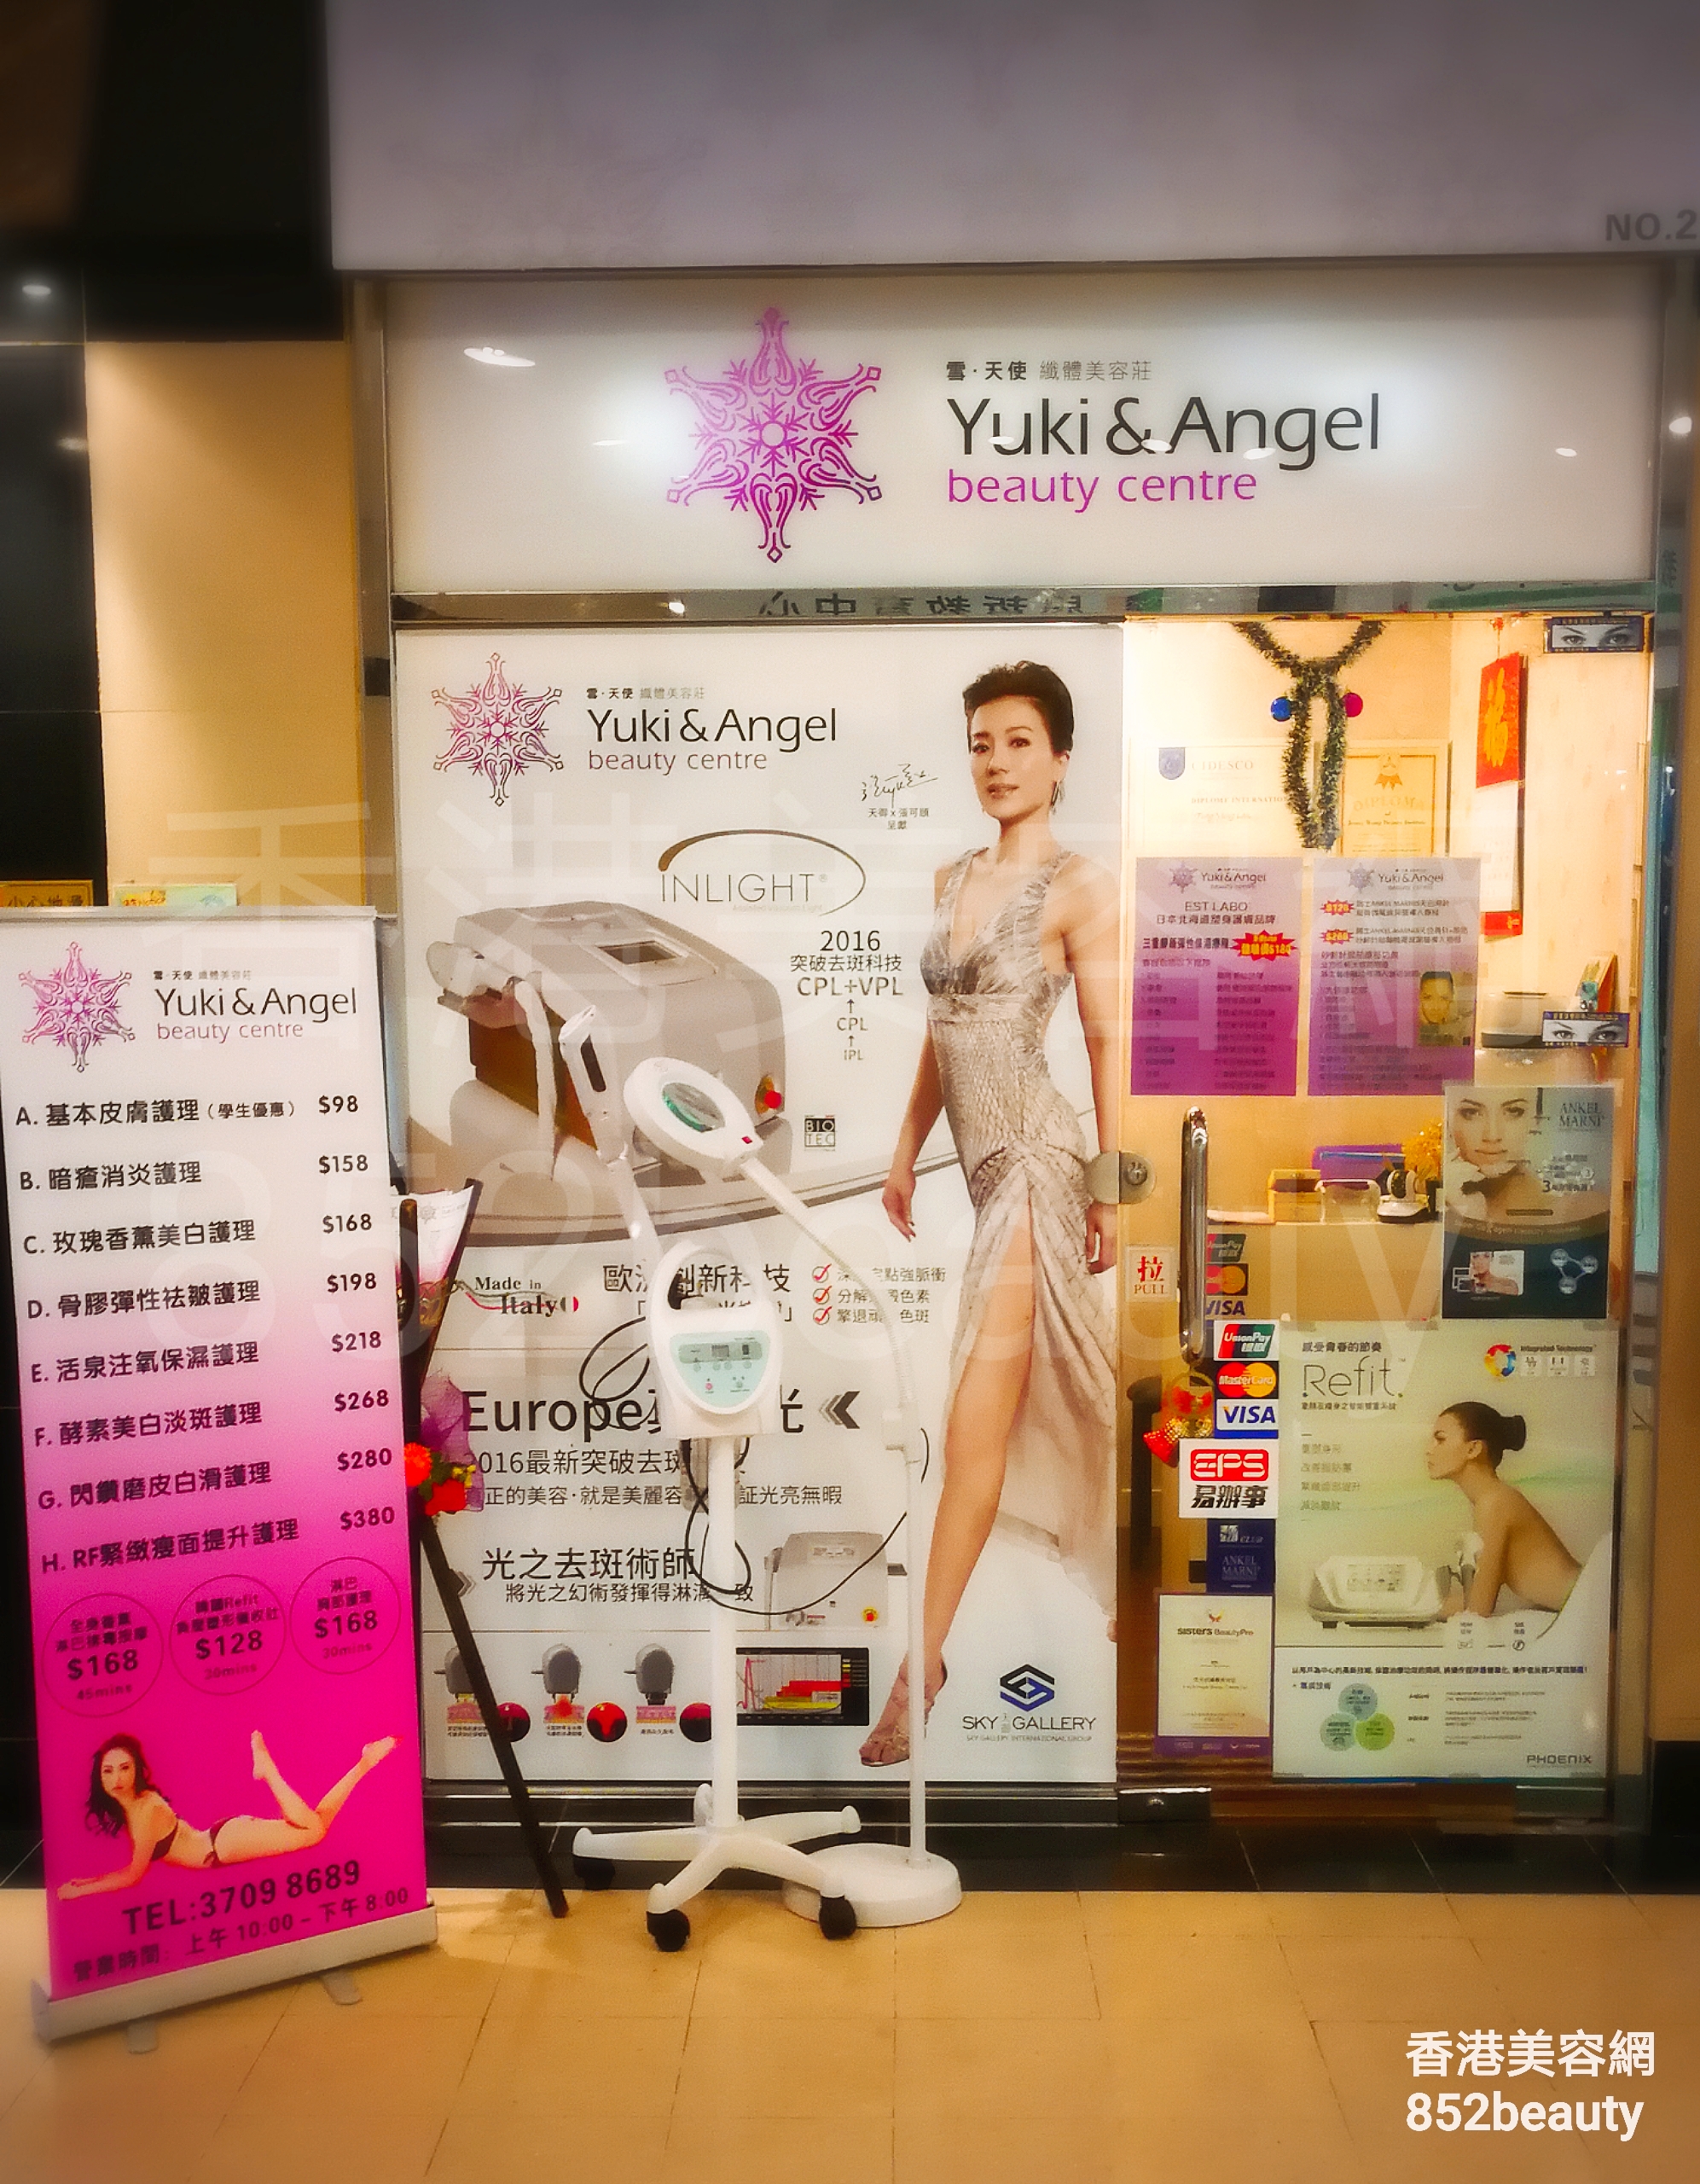 面部护理: Yuki & Angel beauty centre